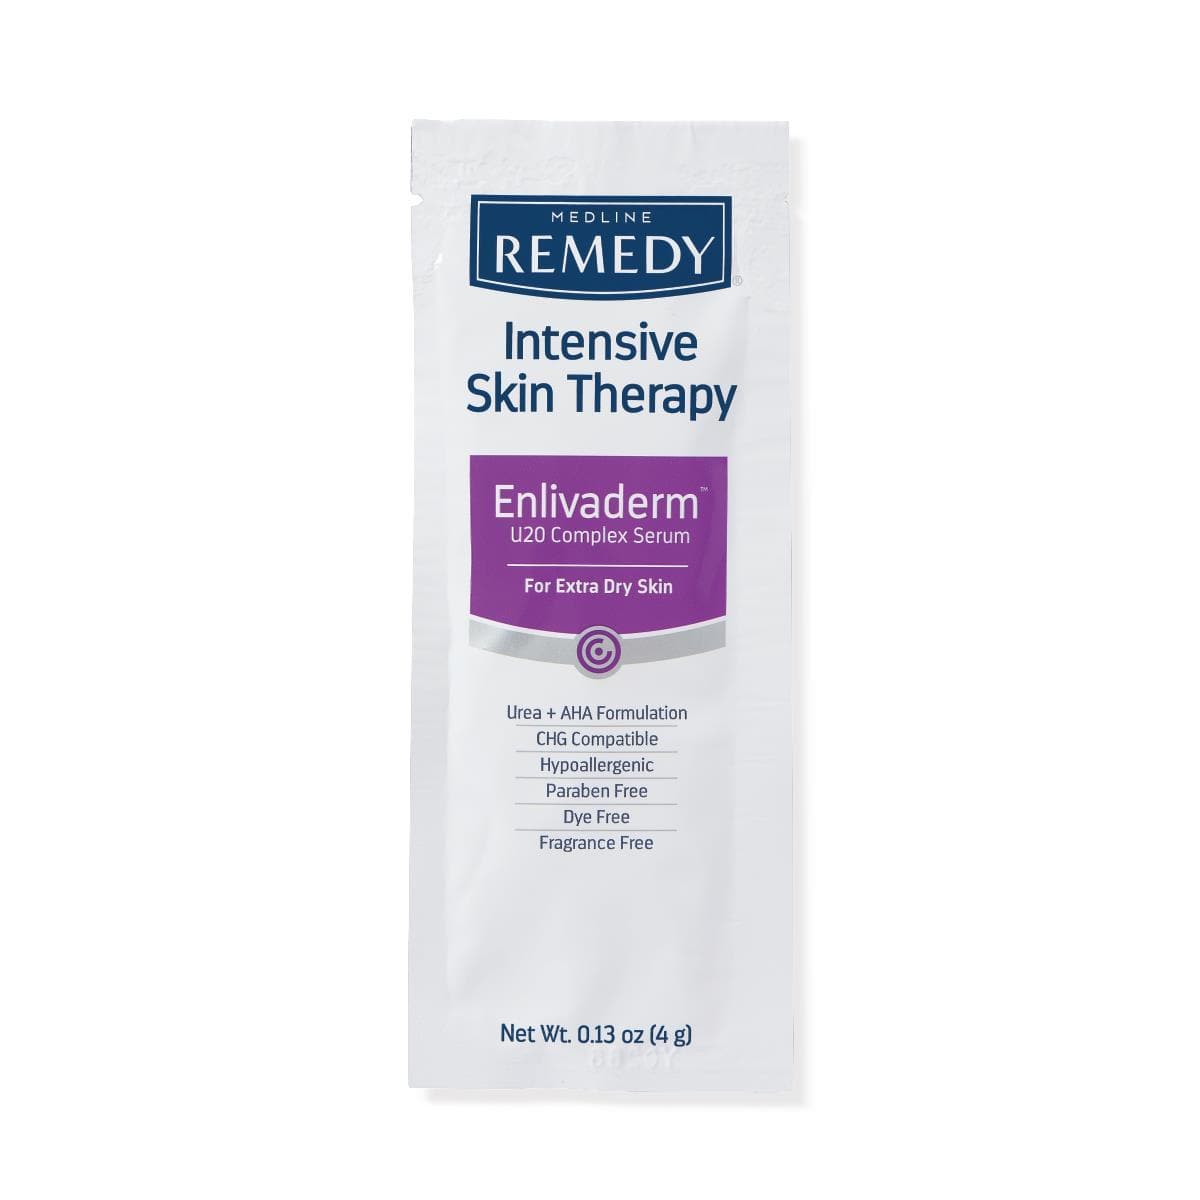 Medline Remedy Enlivaderm Hydrating Serum - Intensive Skin Therapy - Senior.com Hydrating Serums